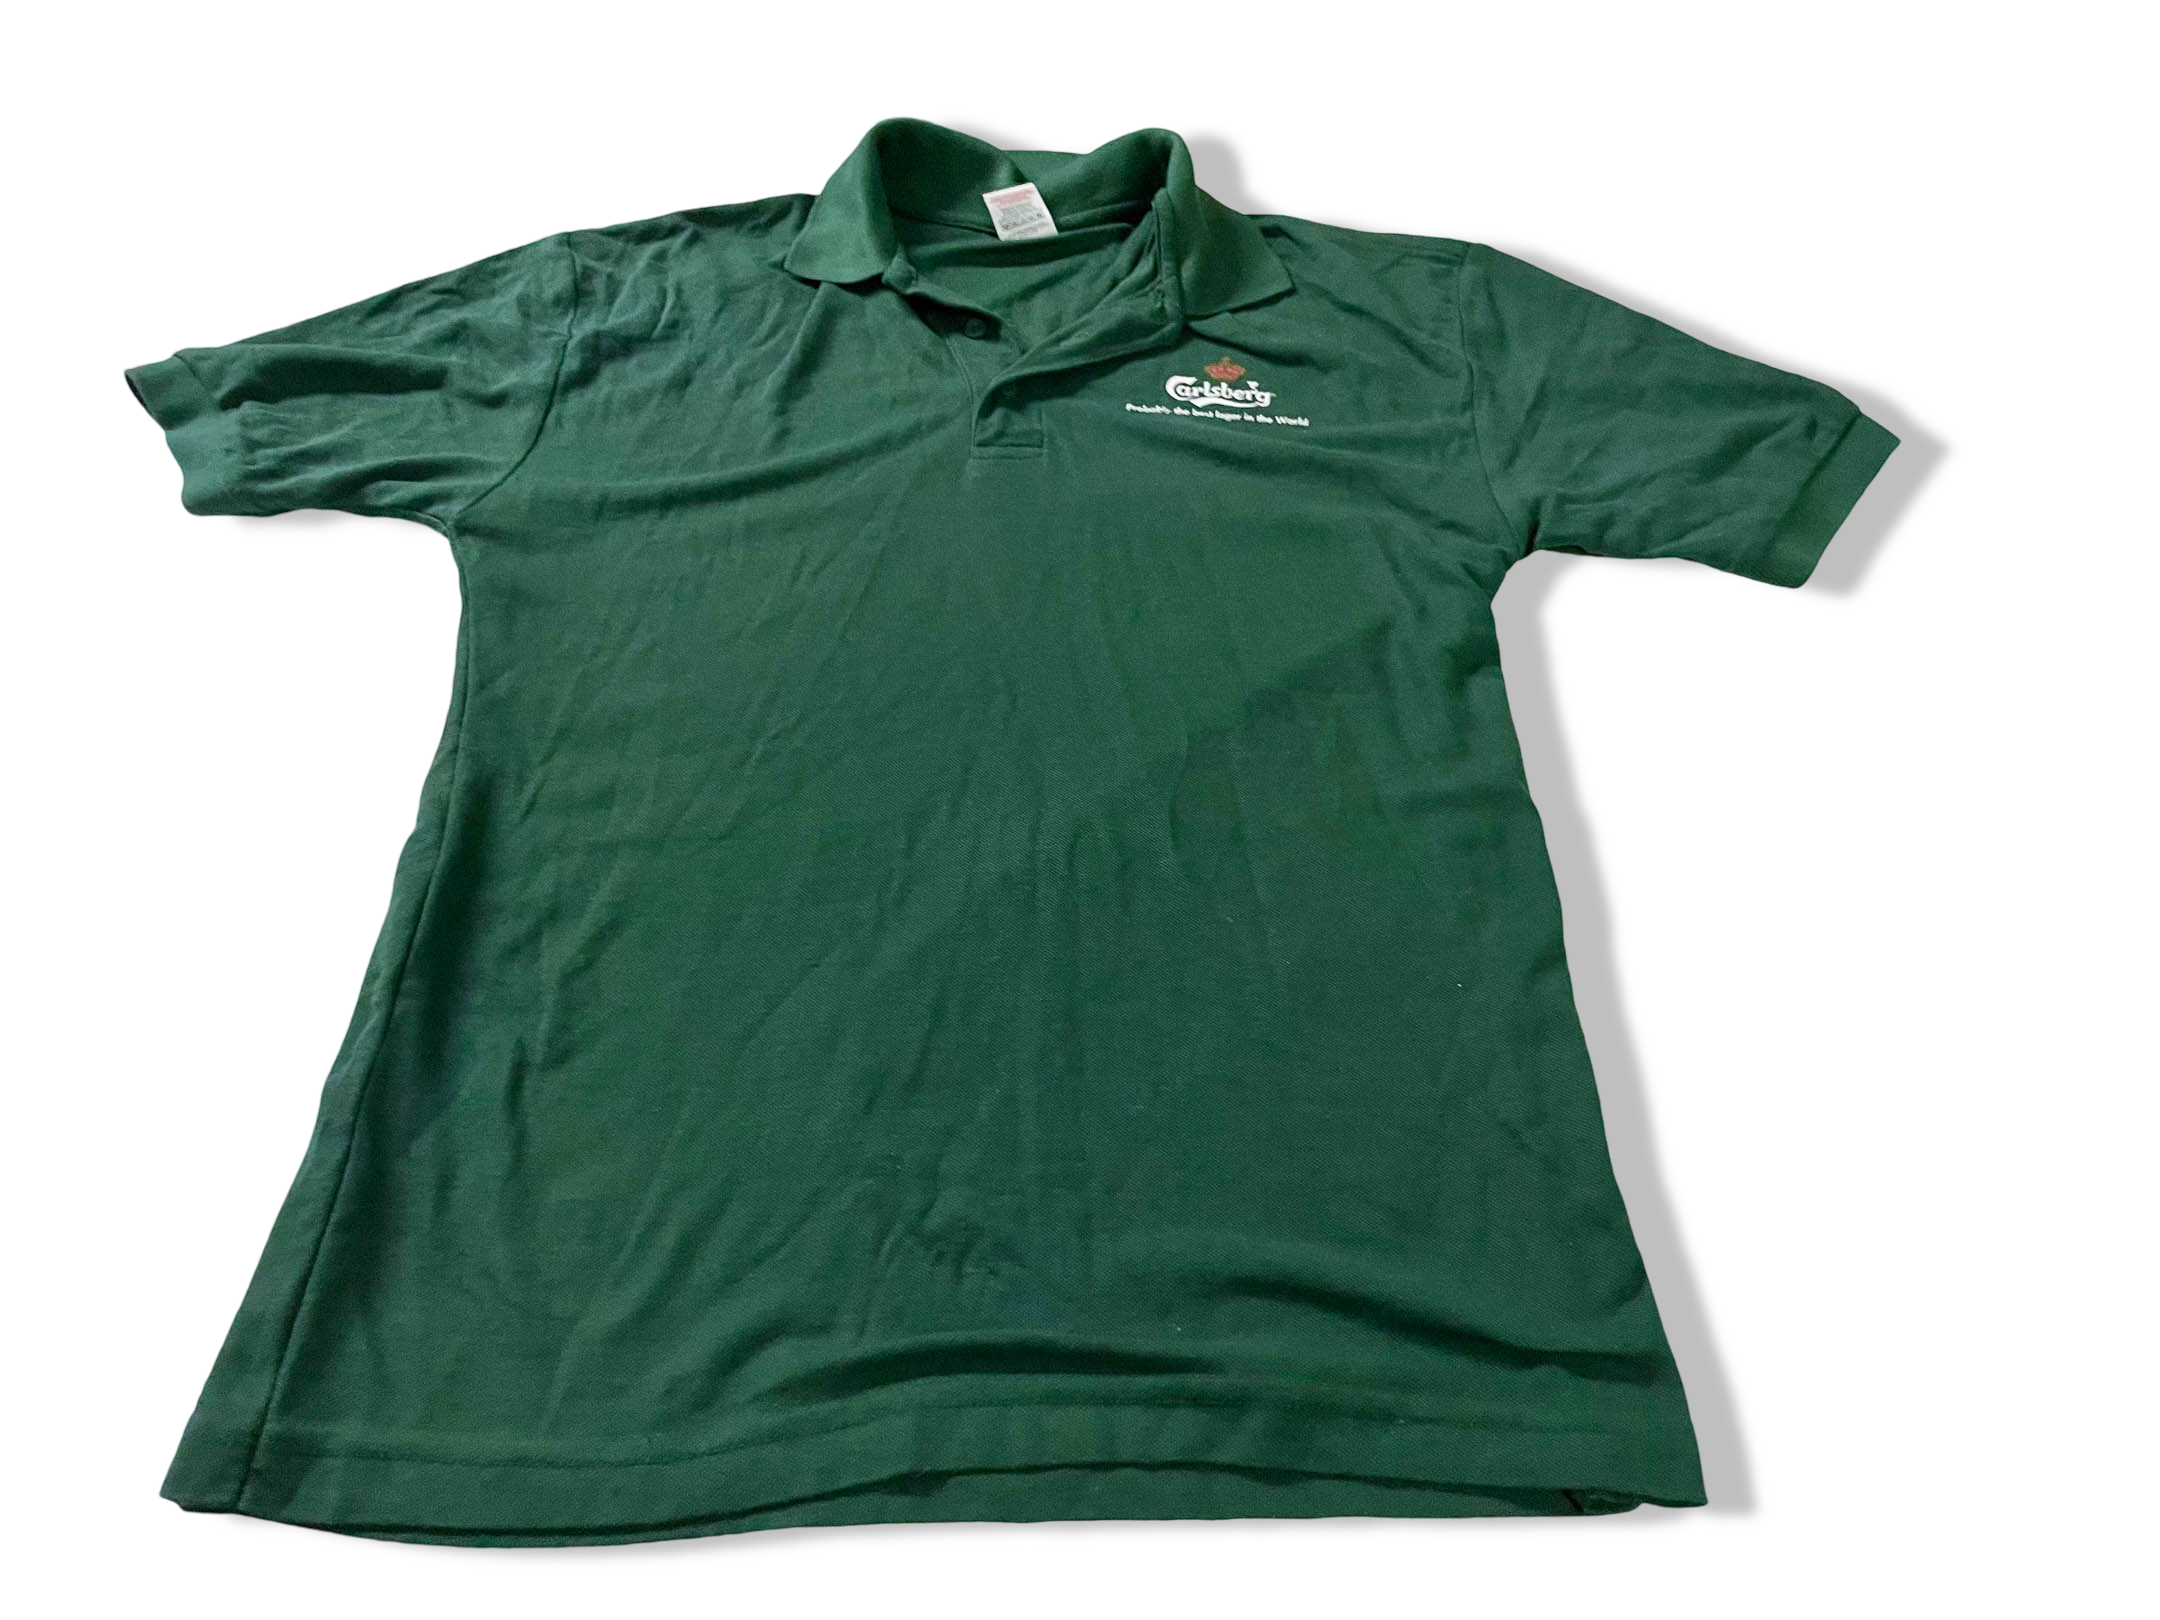 Vintage Men's Fruit of the loom Carlsberg green polo shirt in M|L29 W18| SKU 4114